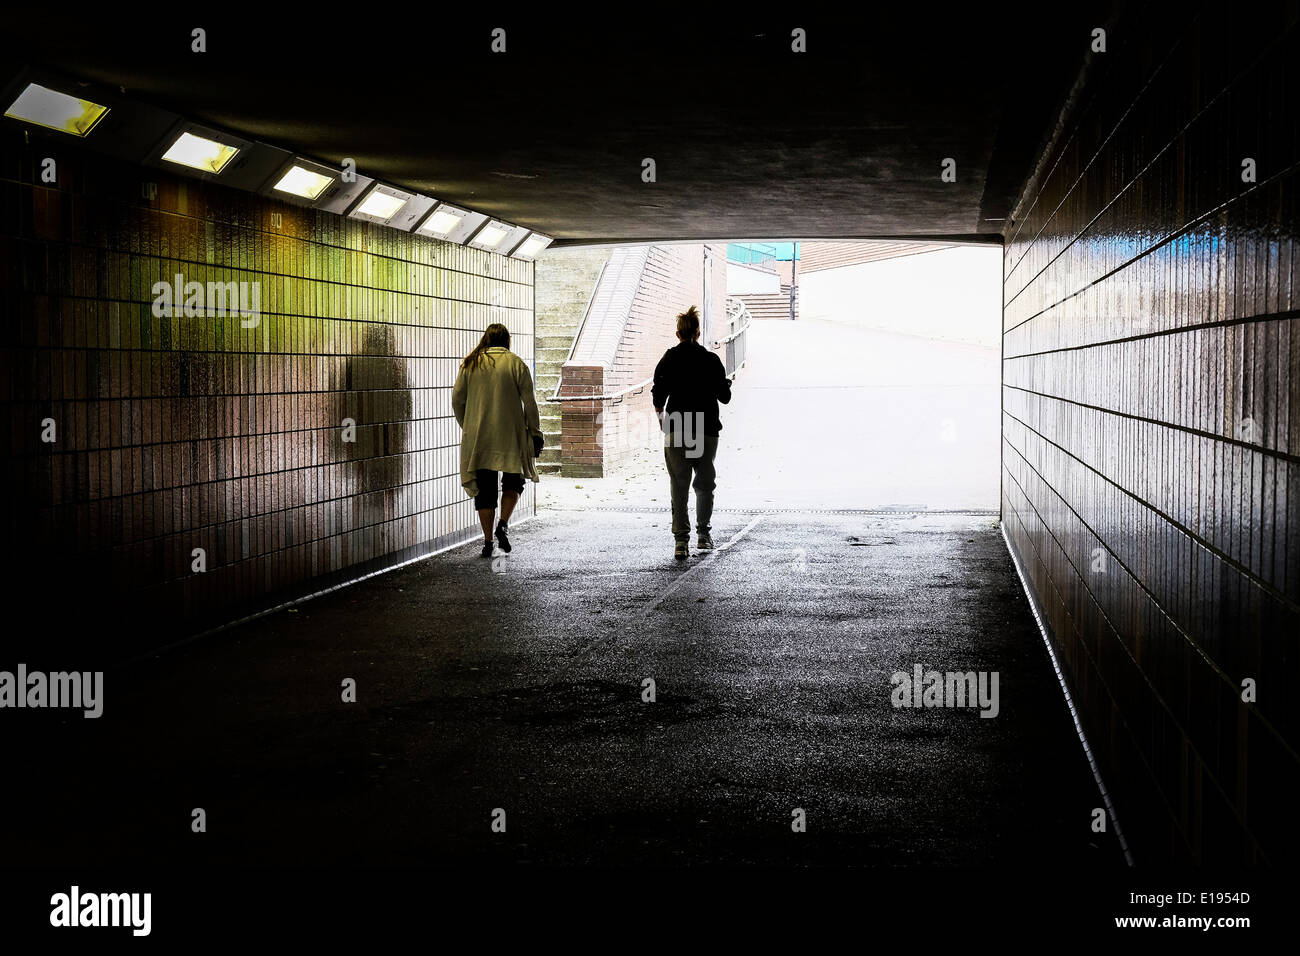 Two people walking through a dark pedestrian subway. Stock Photo